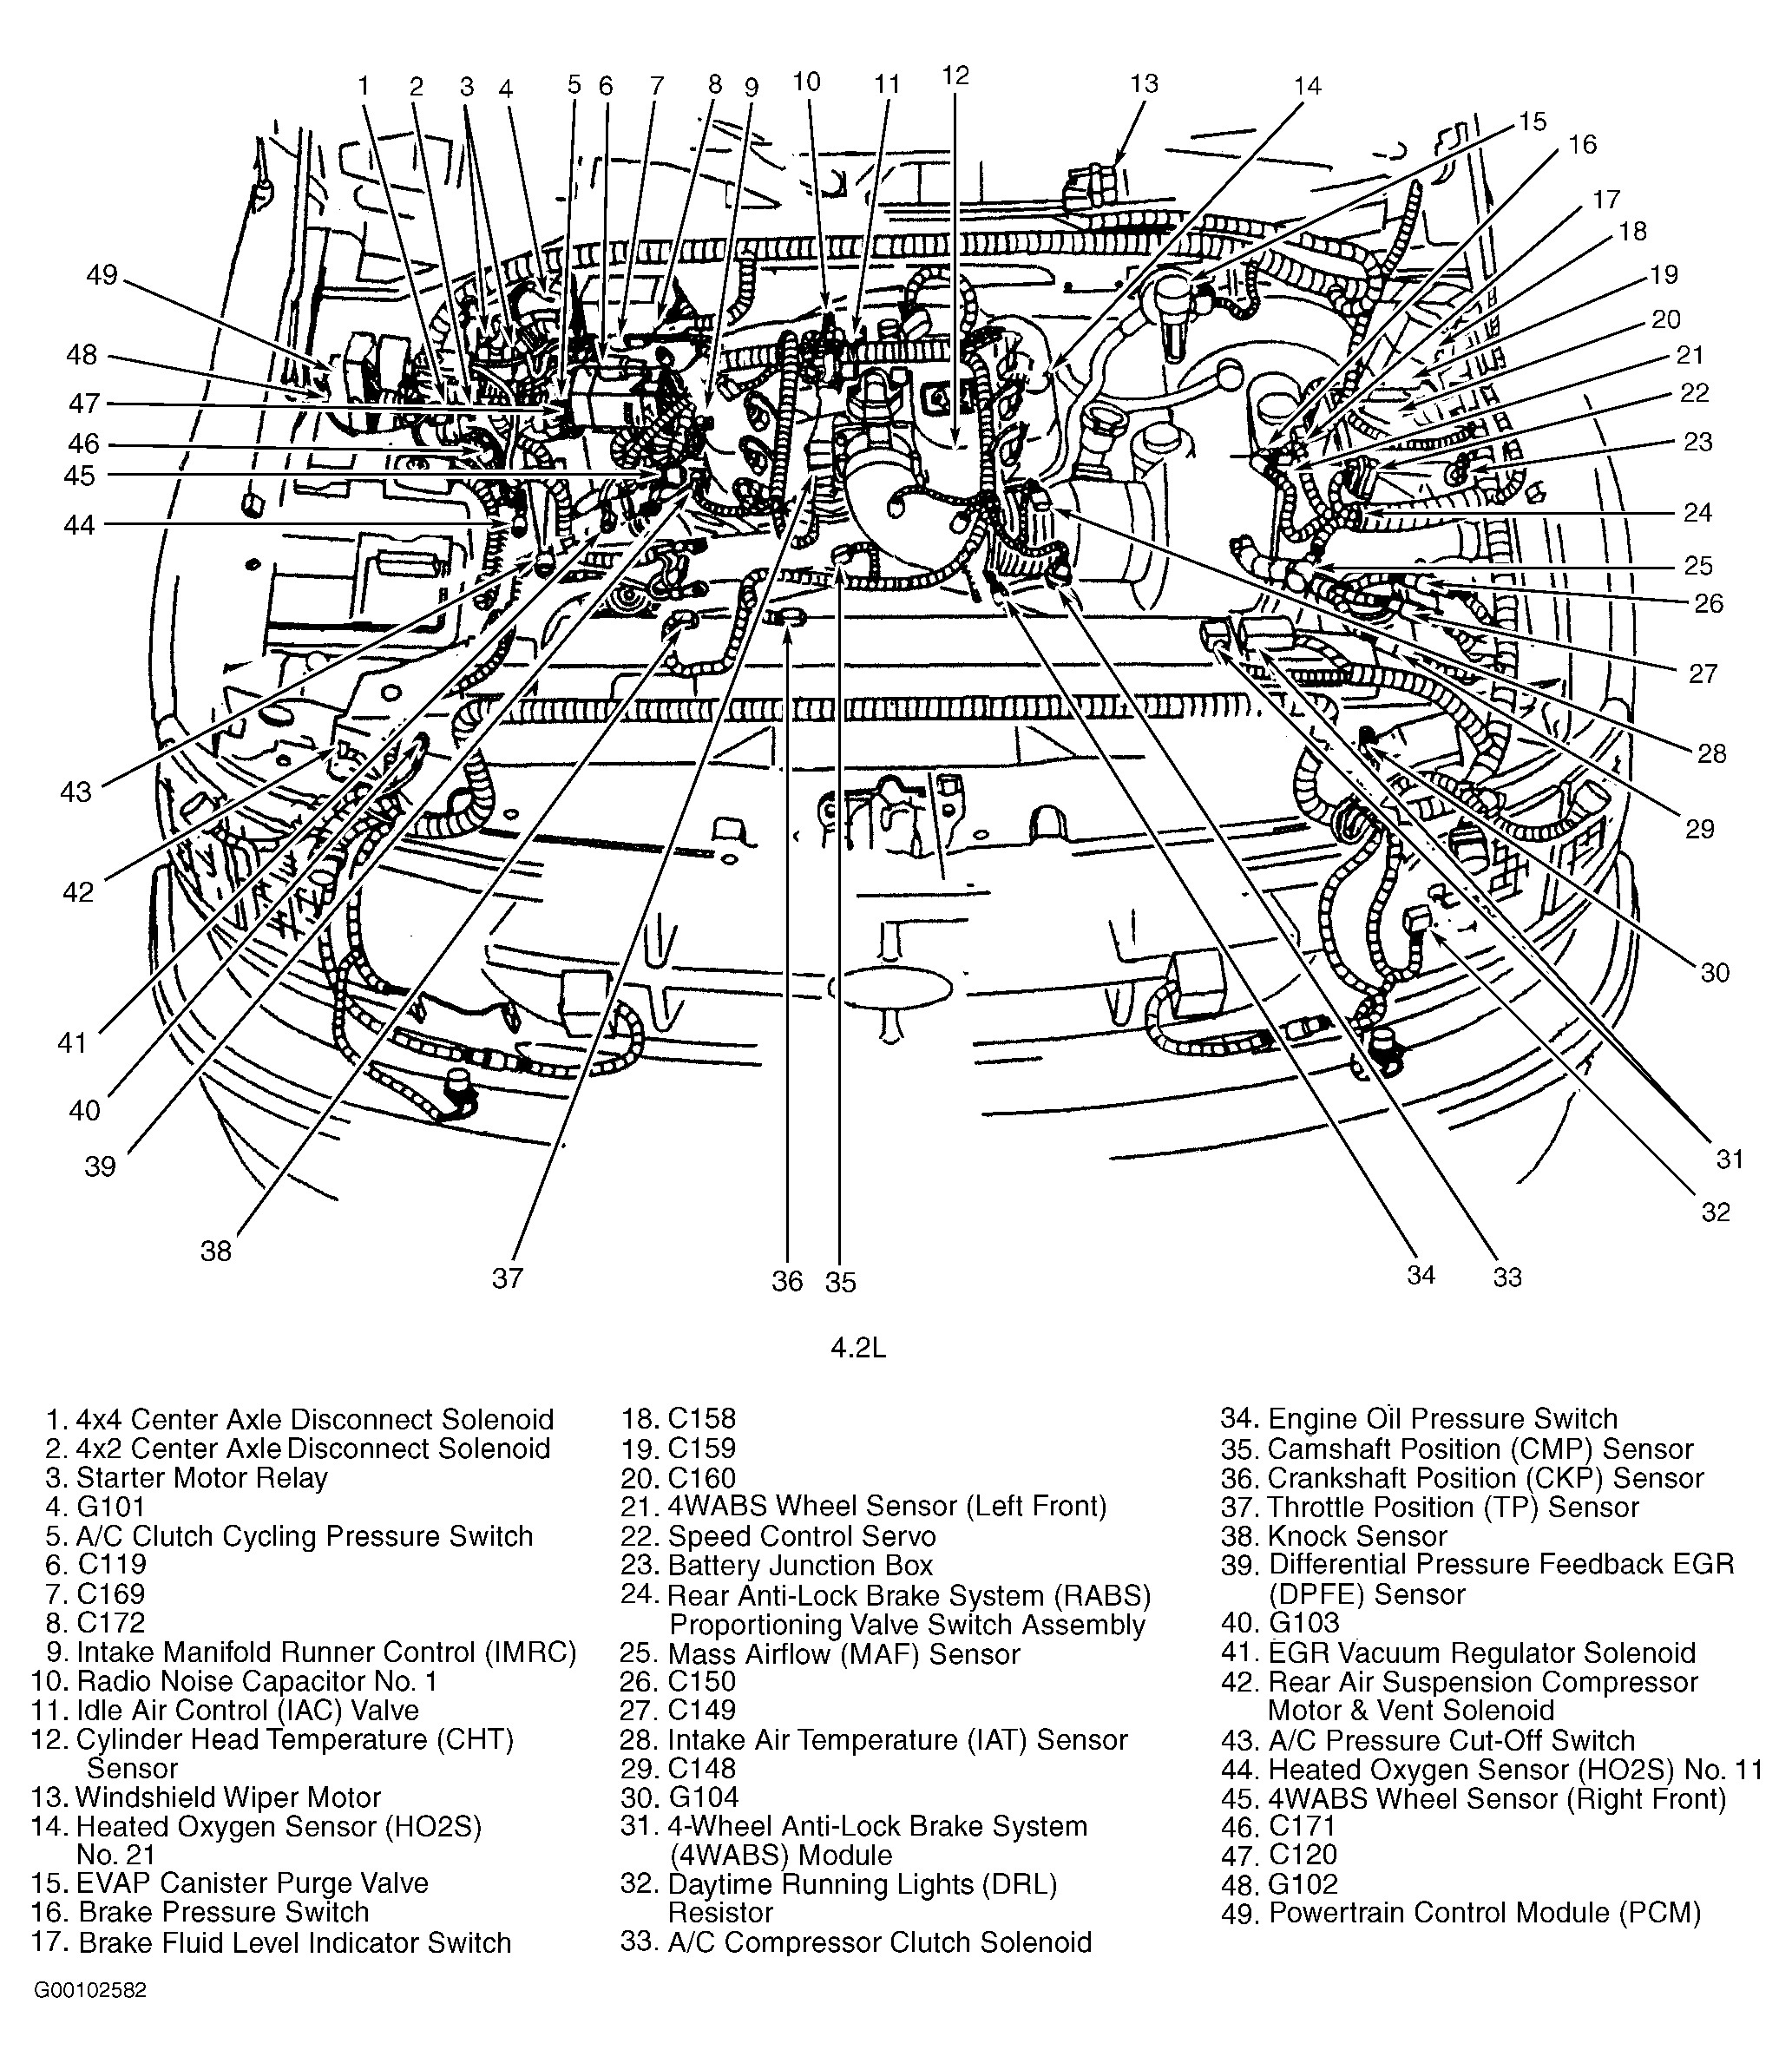 Ford 4 2 Liter V6 Engine Diagram Wunderbar 1990 ford F150 Vakuumdiagramm Bilder Elektrische Of Ford 4 2 Liter V6 Engine Diagram